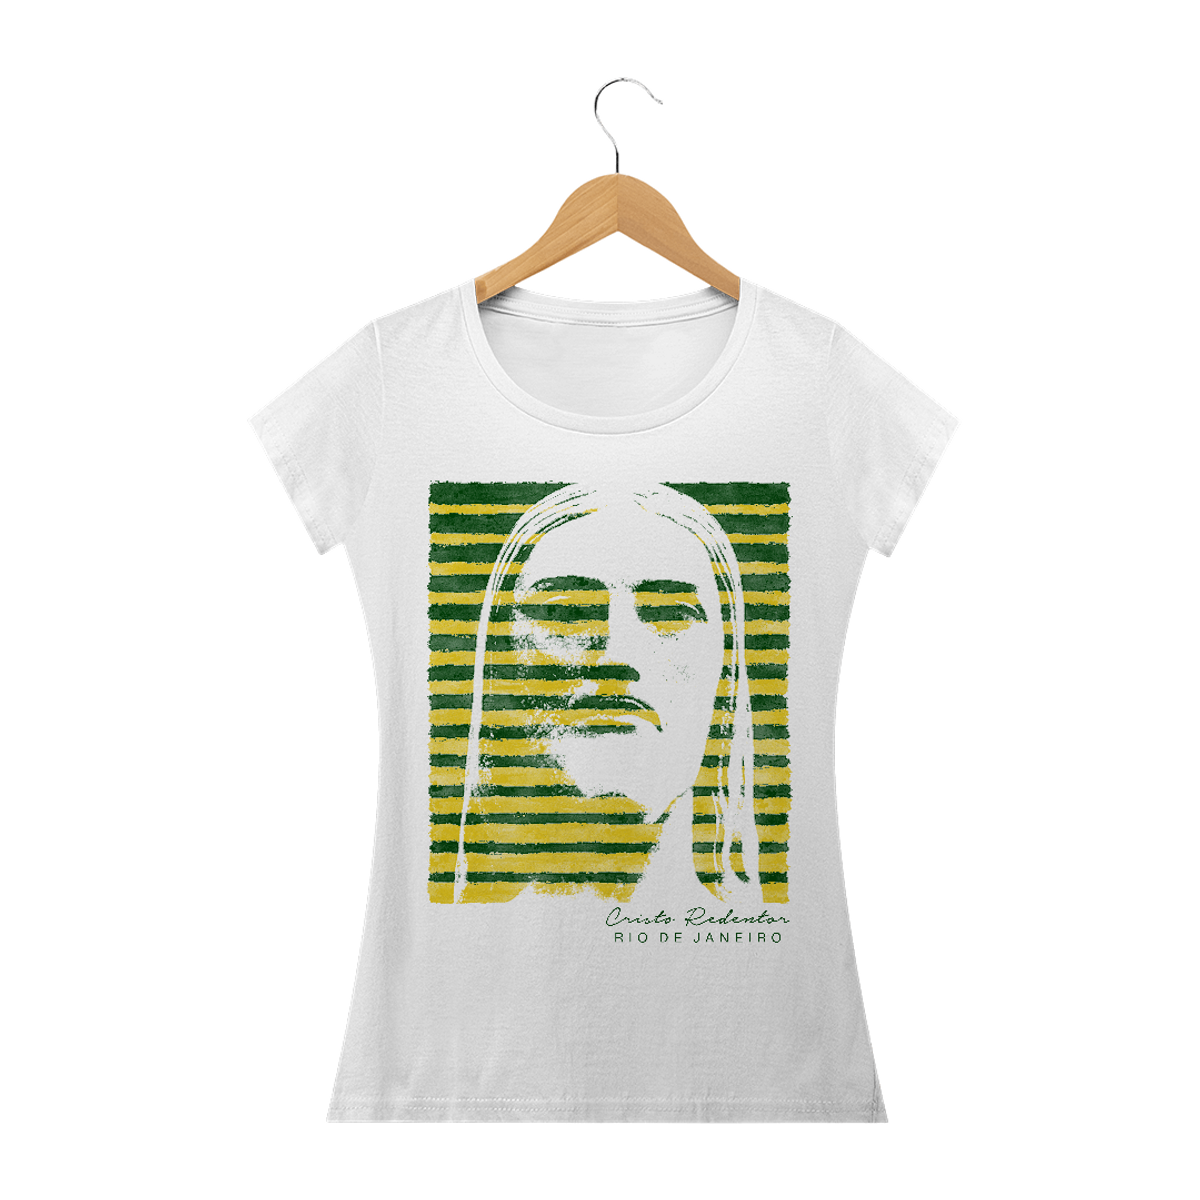 Nome do produto: Camiseta Feminina Cristo Redentor verde e amarelo